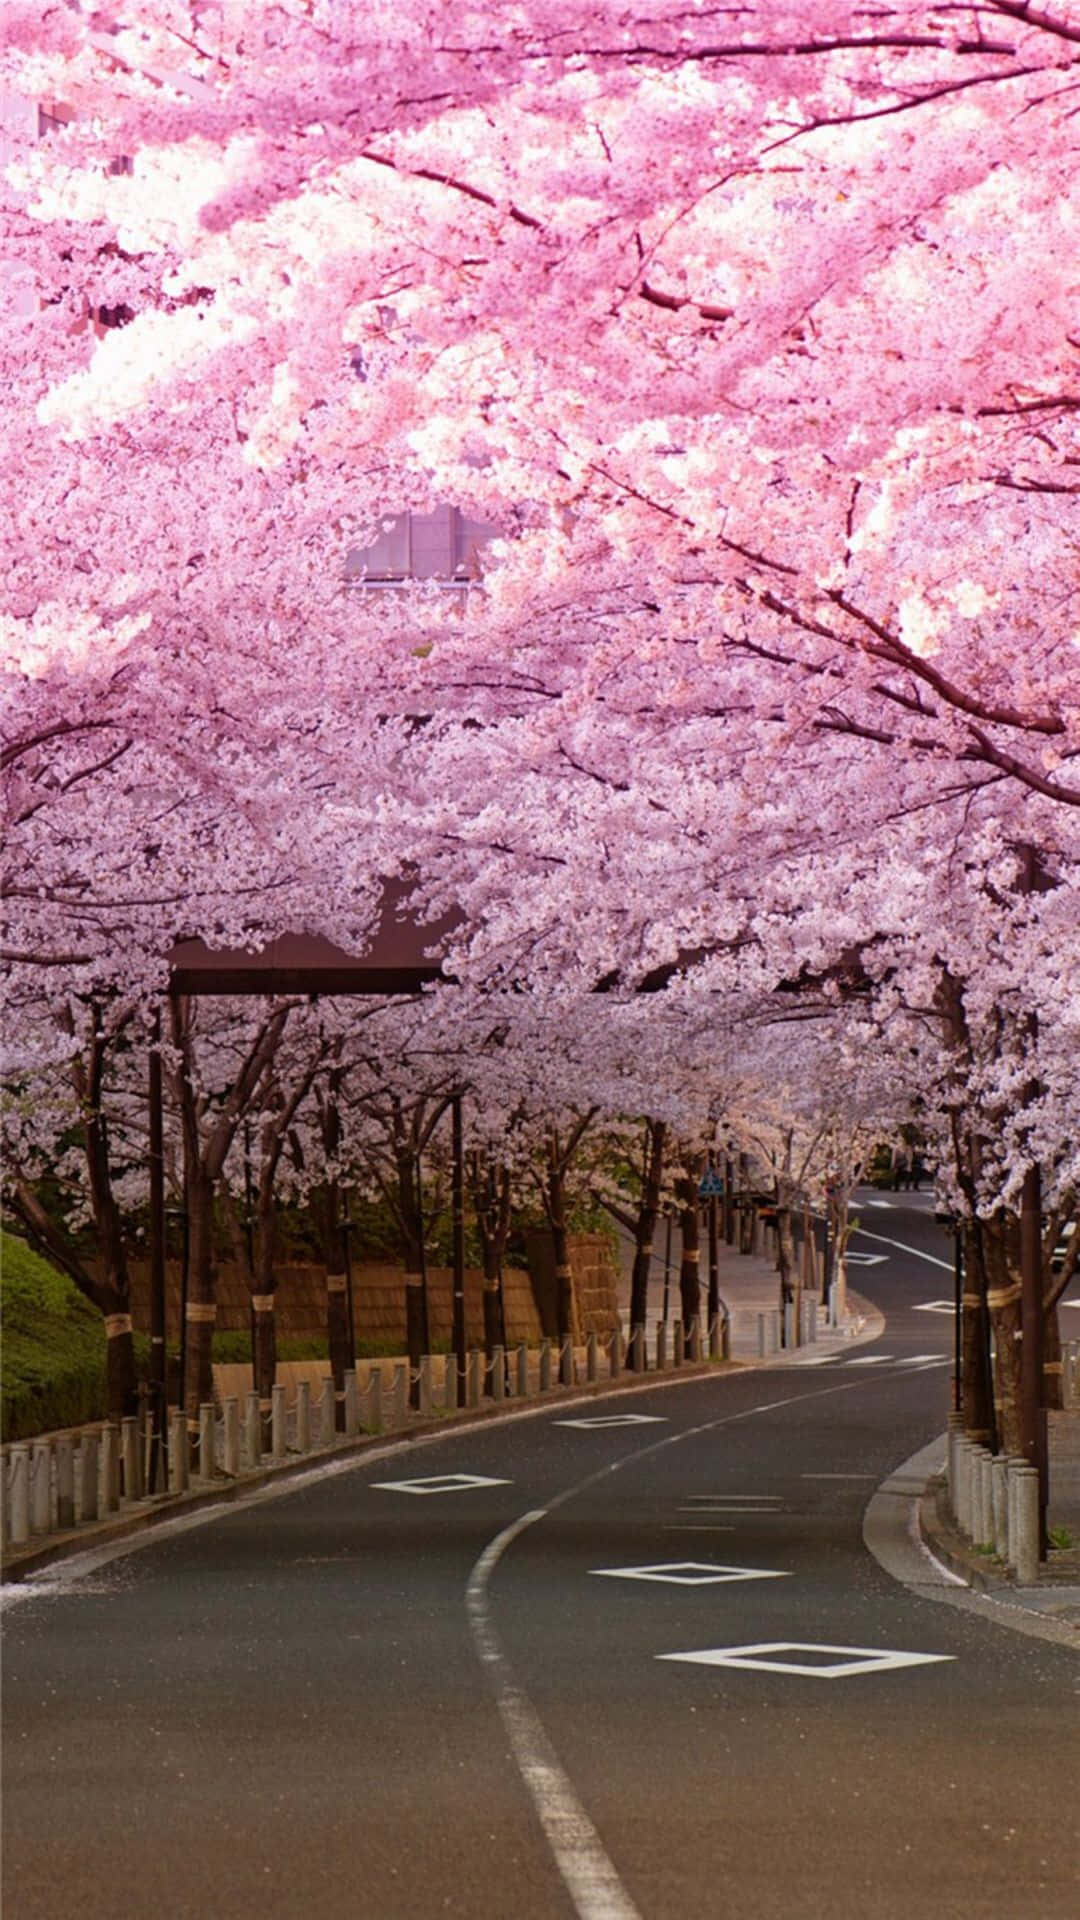 Enchanting Cherry Blossom Trees